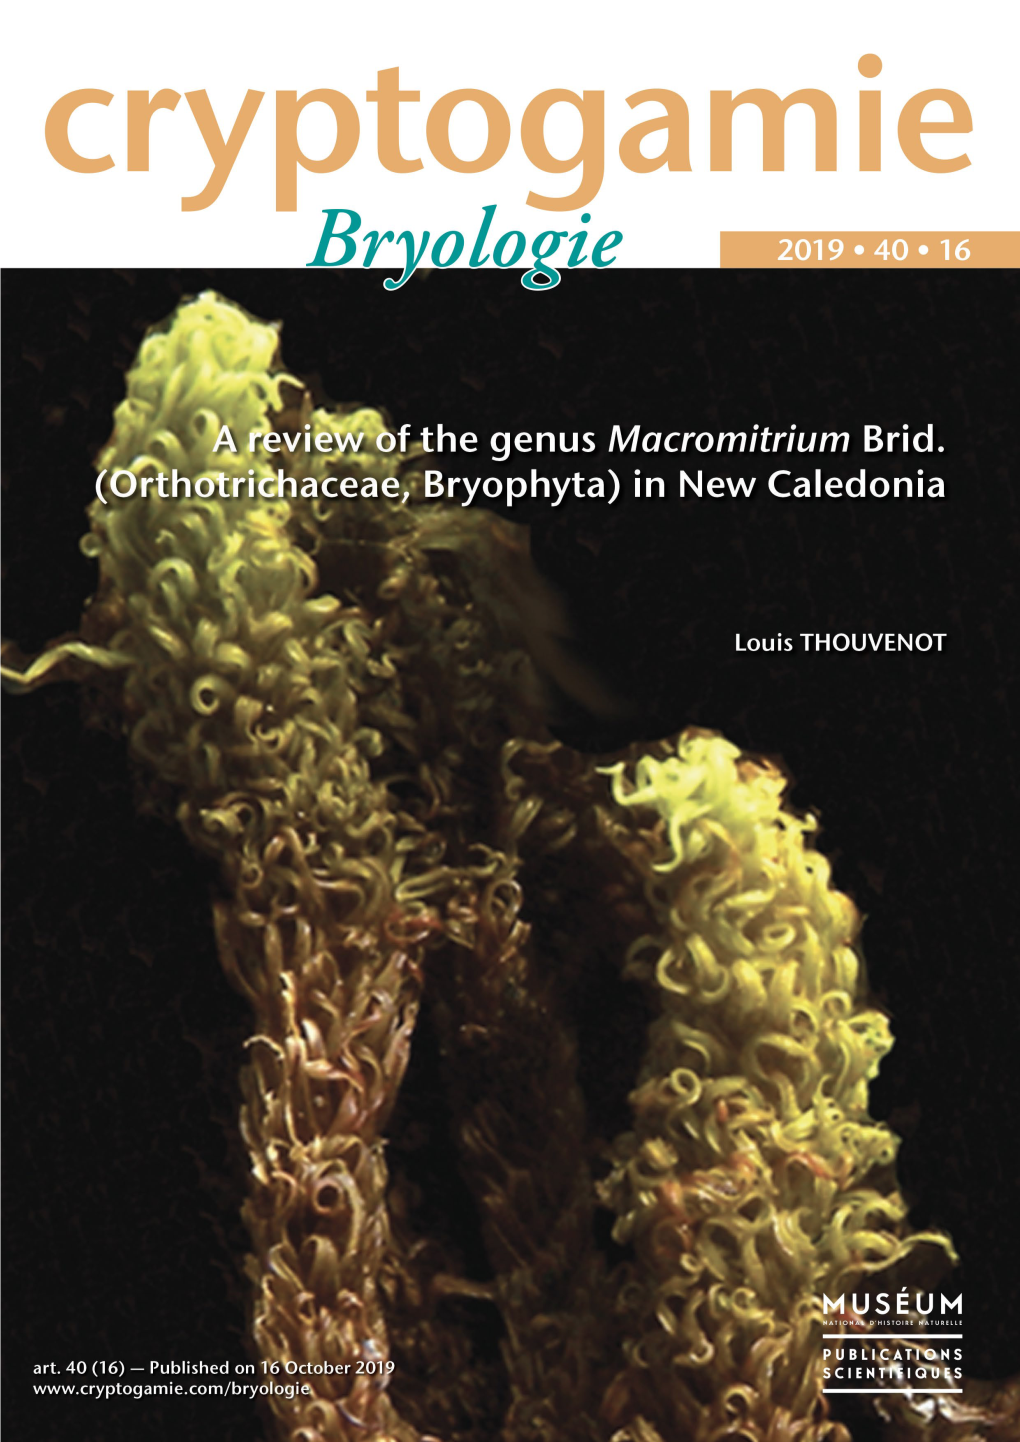 A Review of the Genus Macromitrium Brid. (Orthotrichaceae, Bryophyta) in New Caledonia